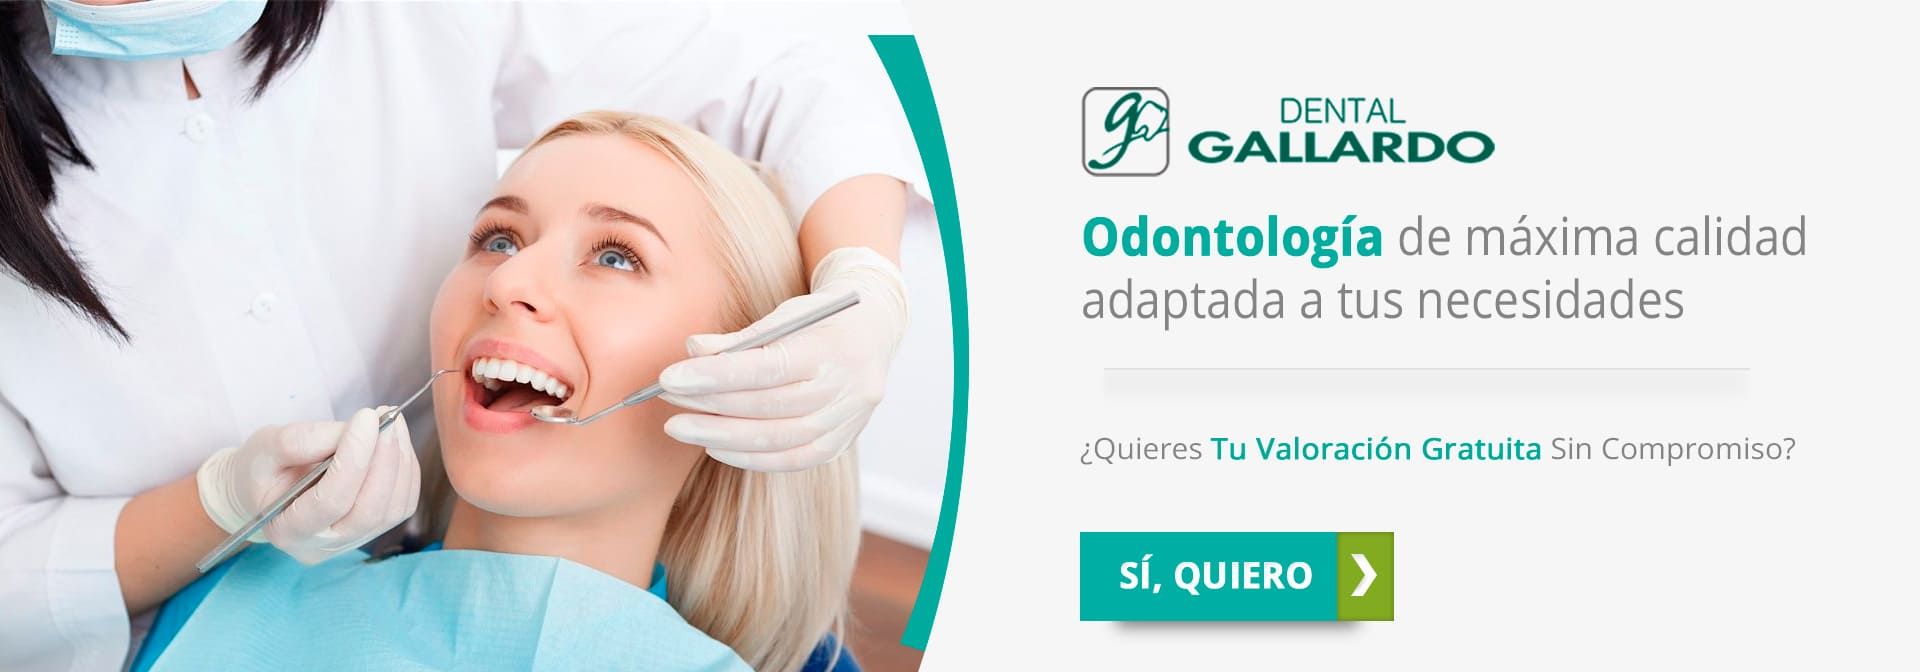 Dental Gallardo destacado 1